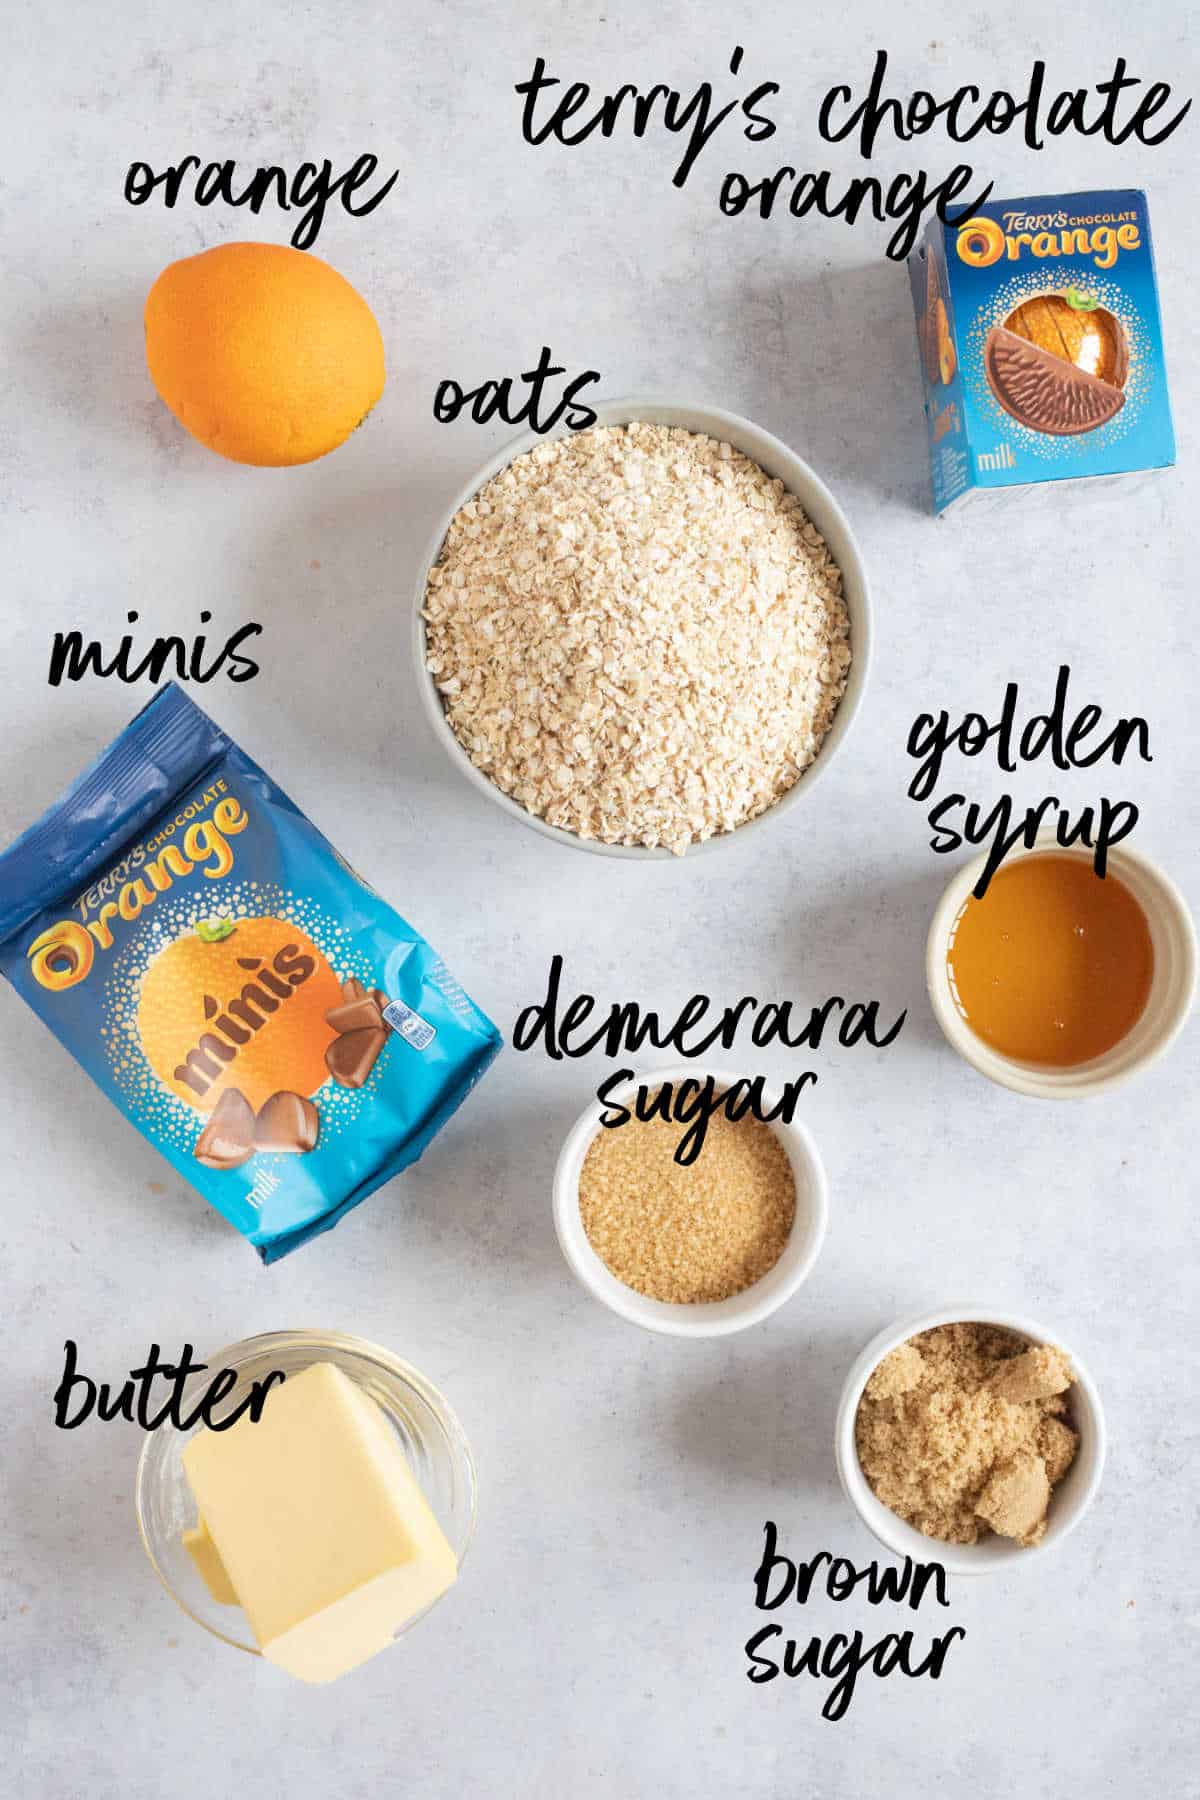 Ingredients for Terry's chocolate orange flapjacks.